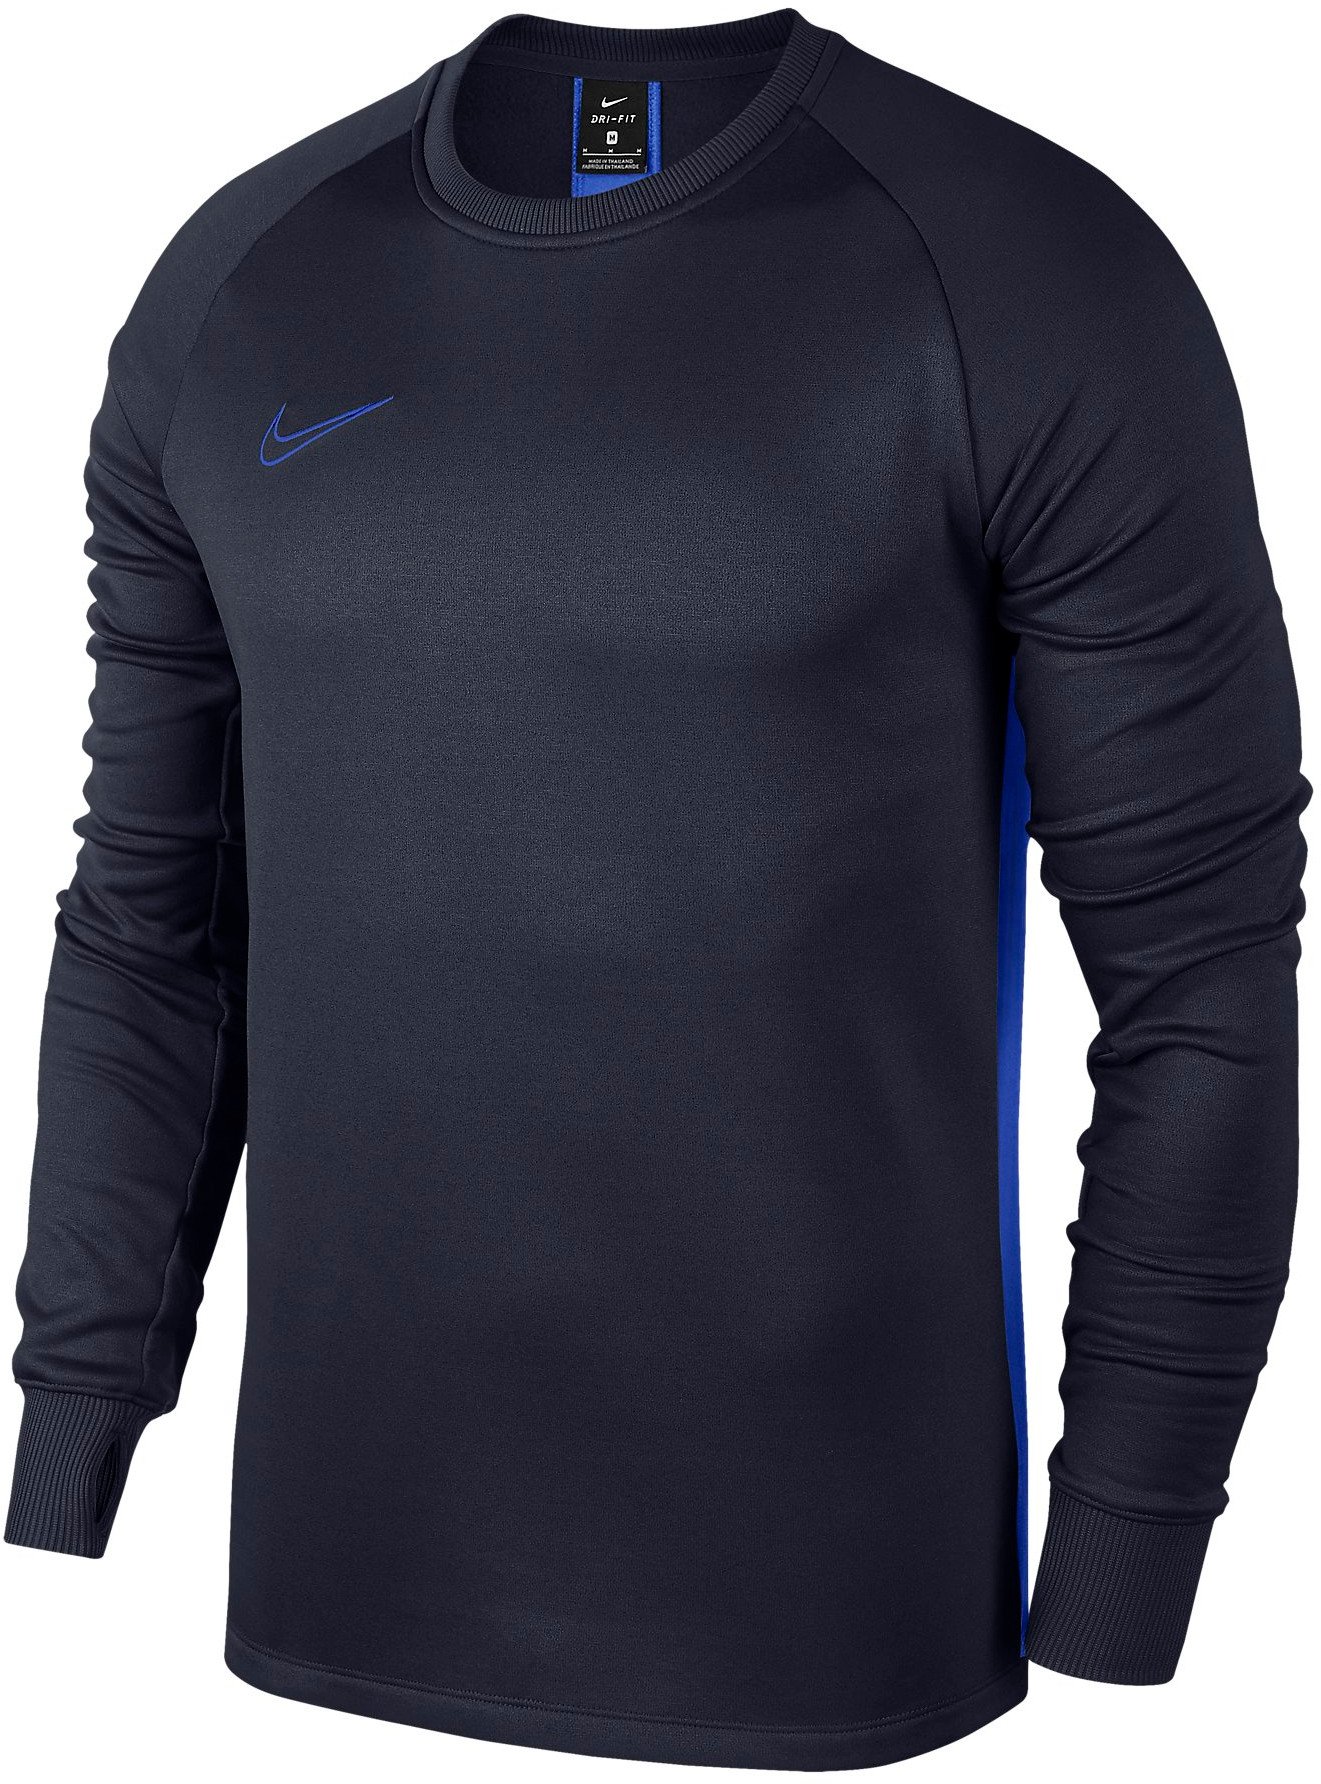 Pánské fotbalové tričko s dlouhým rukávem Nike Therma Academy